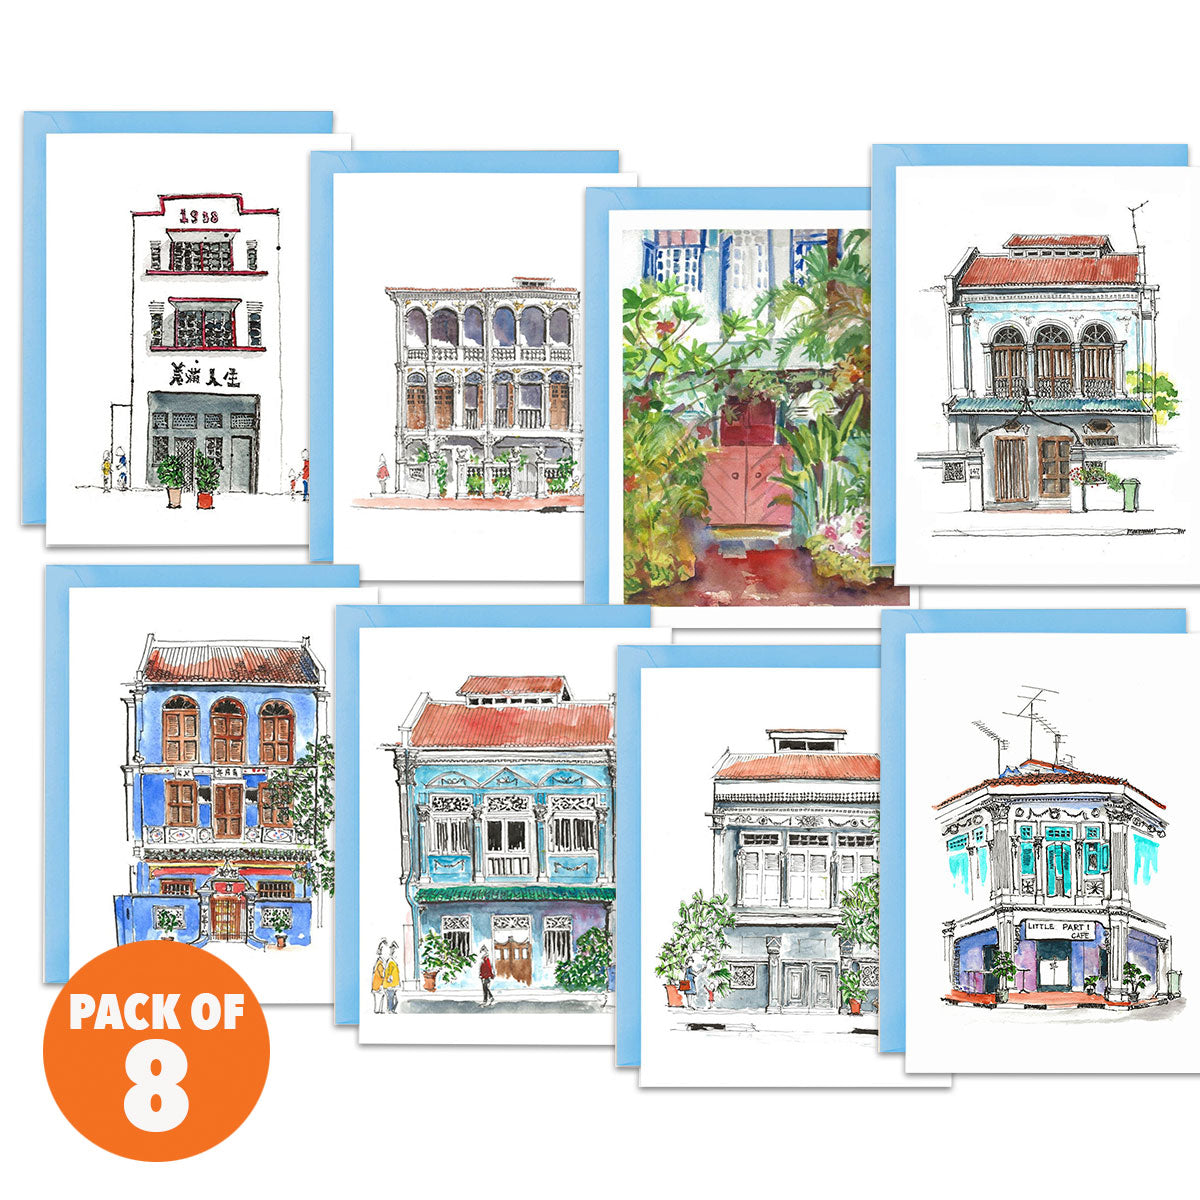 Pack of 8 | Singapore Joo Chiat Shophouses 2021/2022